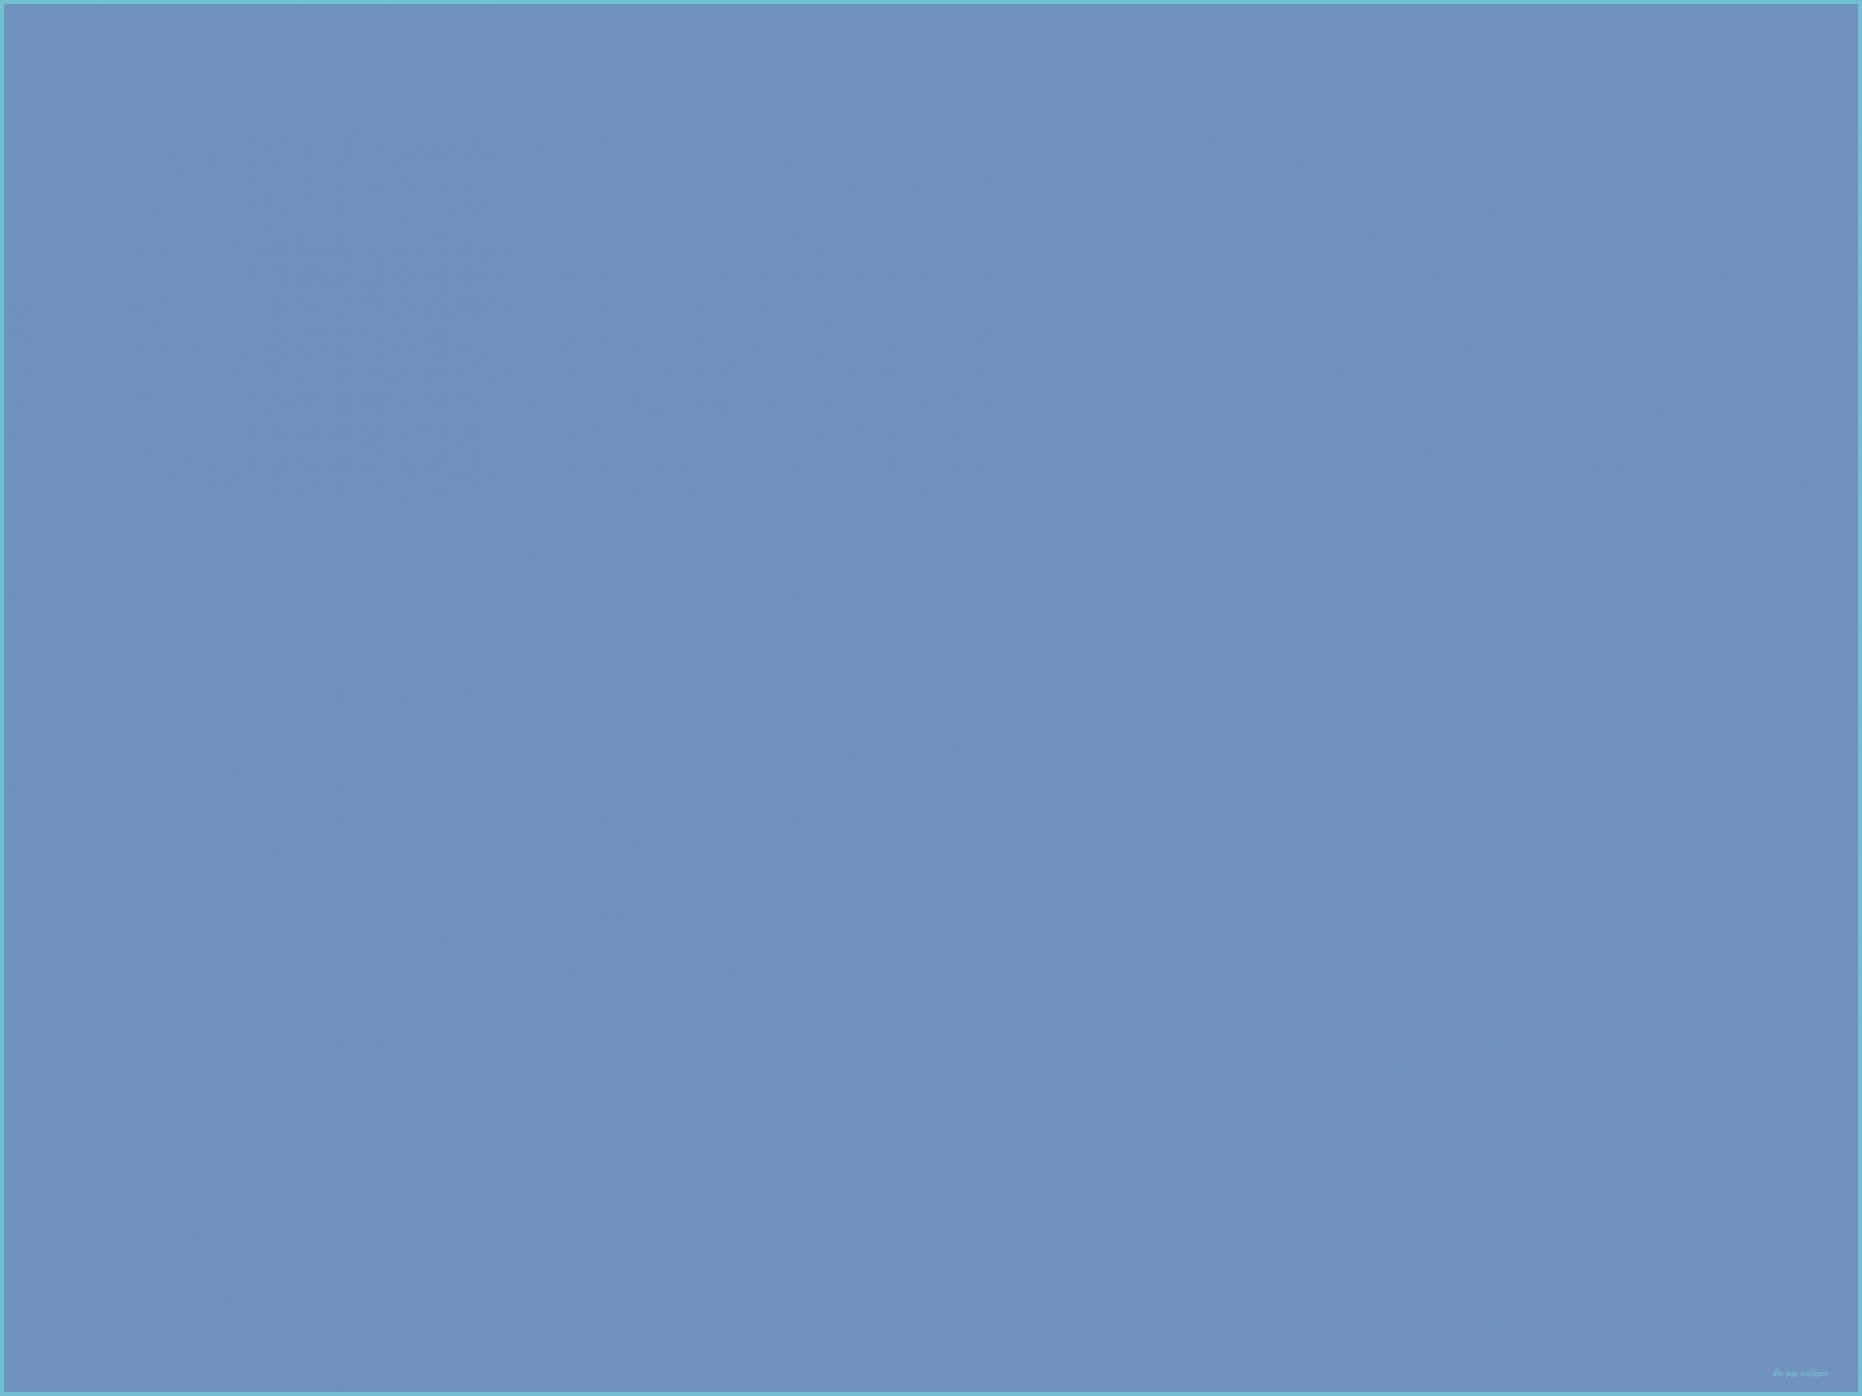 Enblå Fyrkant Med En Liten Fyrkant I Mitten Wallpaper